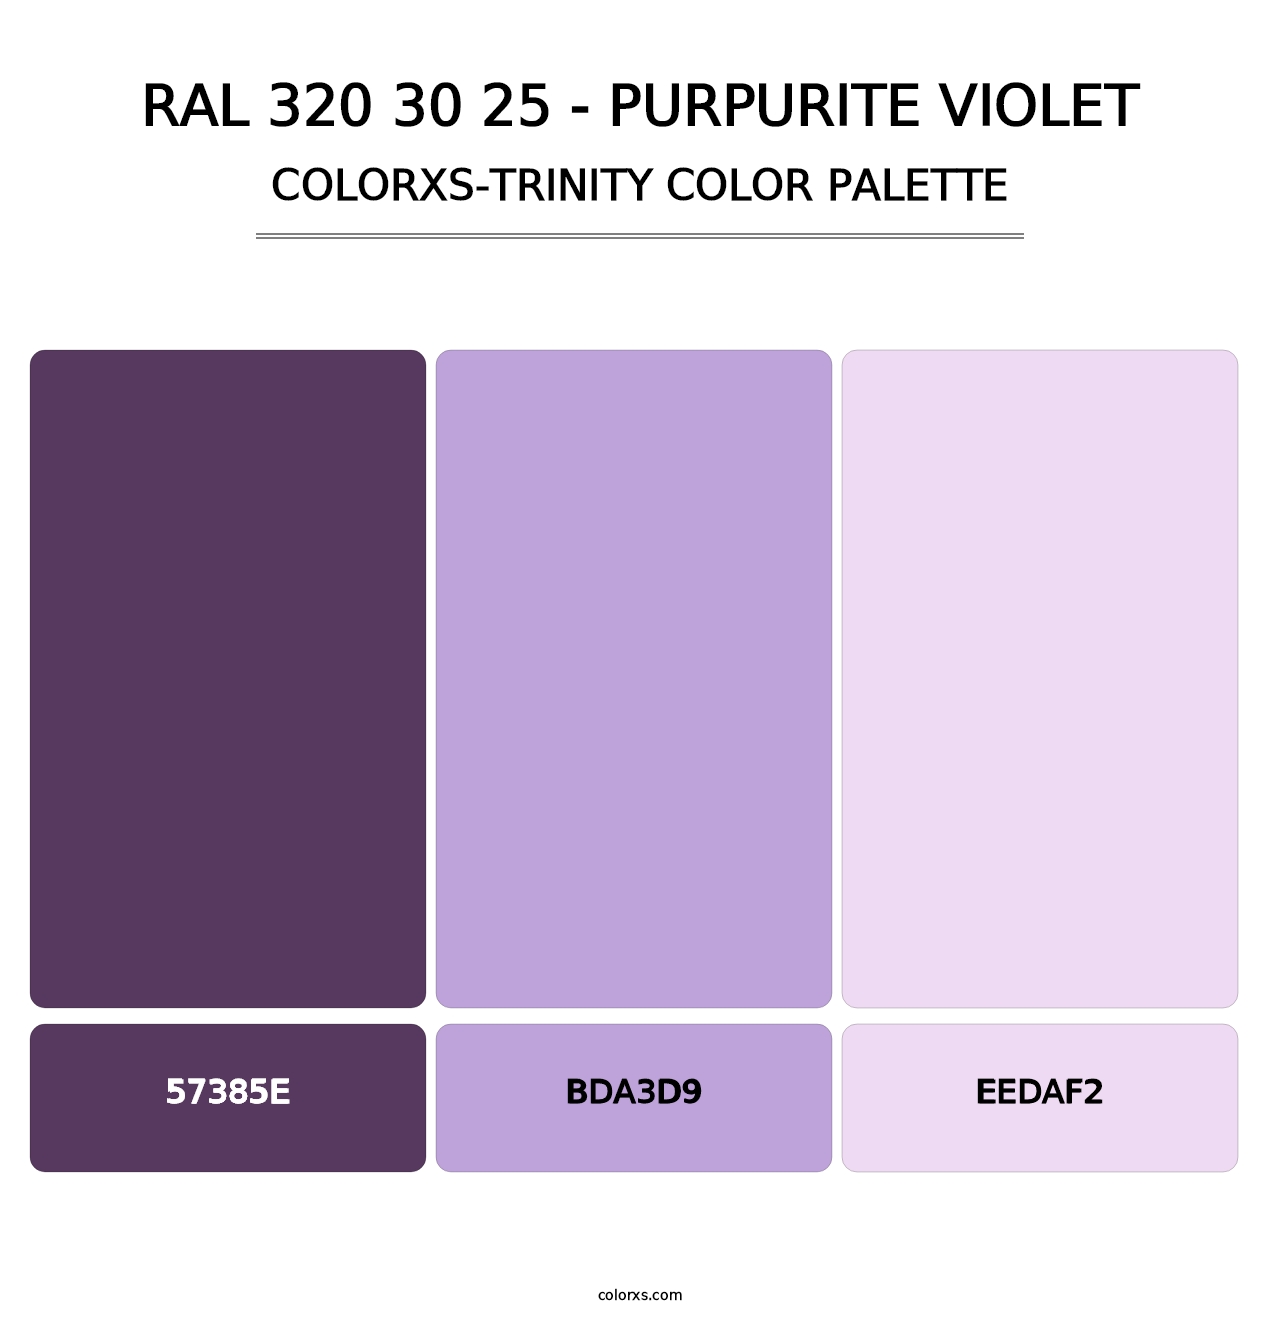 RAL 320 30 25 - Purpurite Violet - Colorxs Trinity Palette